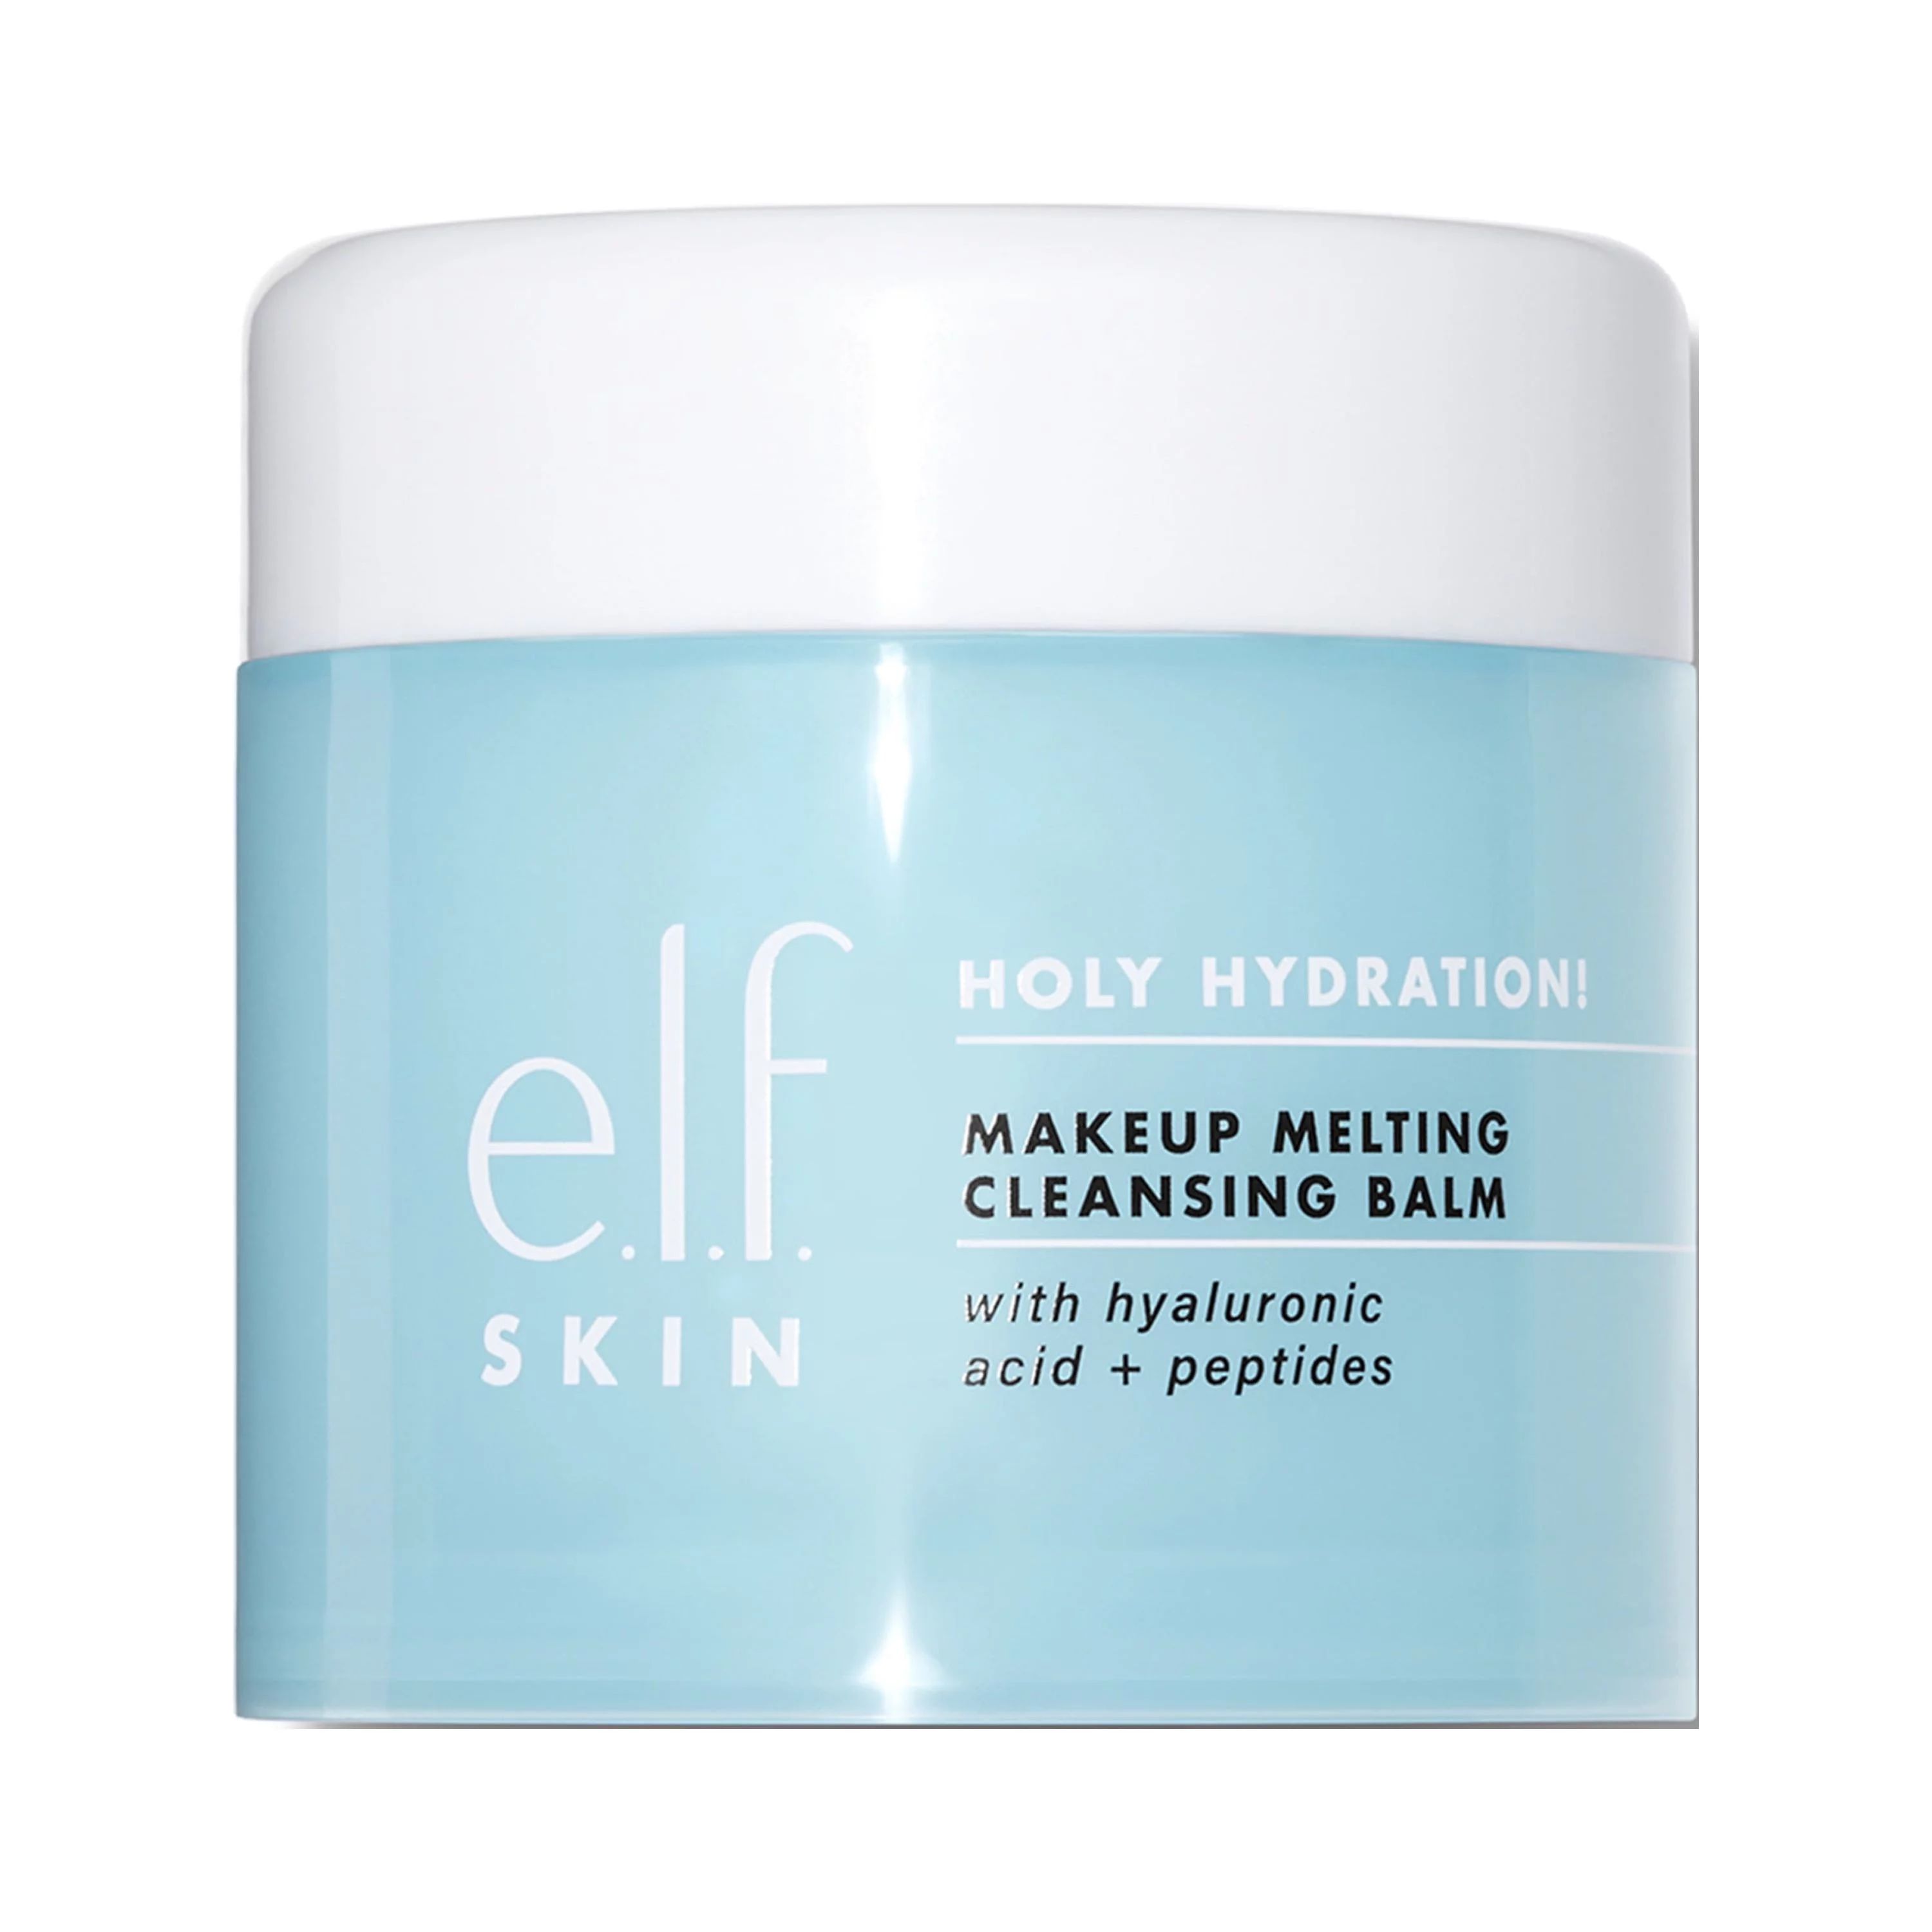 e.l.f. SKIN Holy Hydration! Makeup Melting Cleansing Balm, 2oz | Walmart (US)